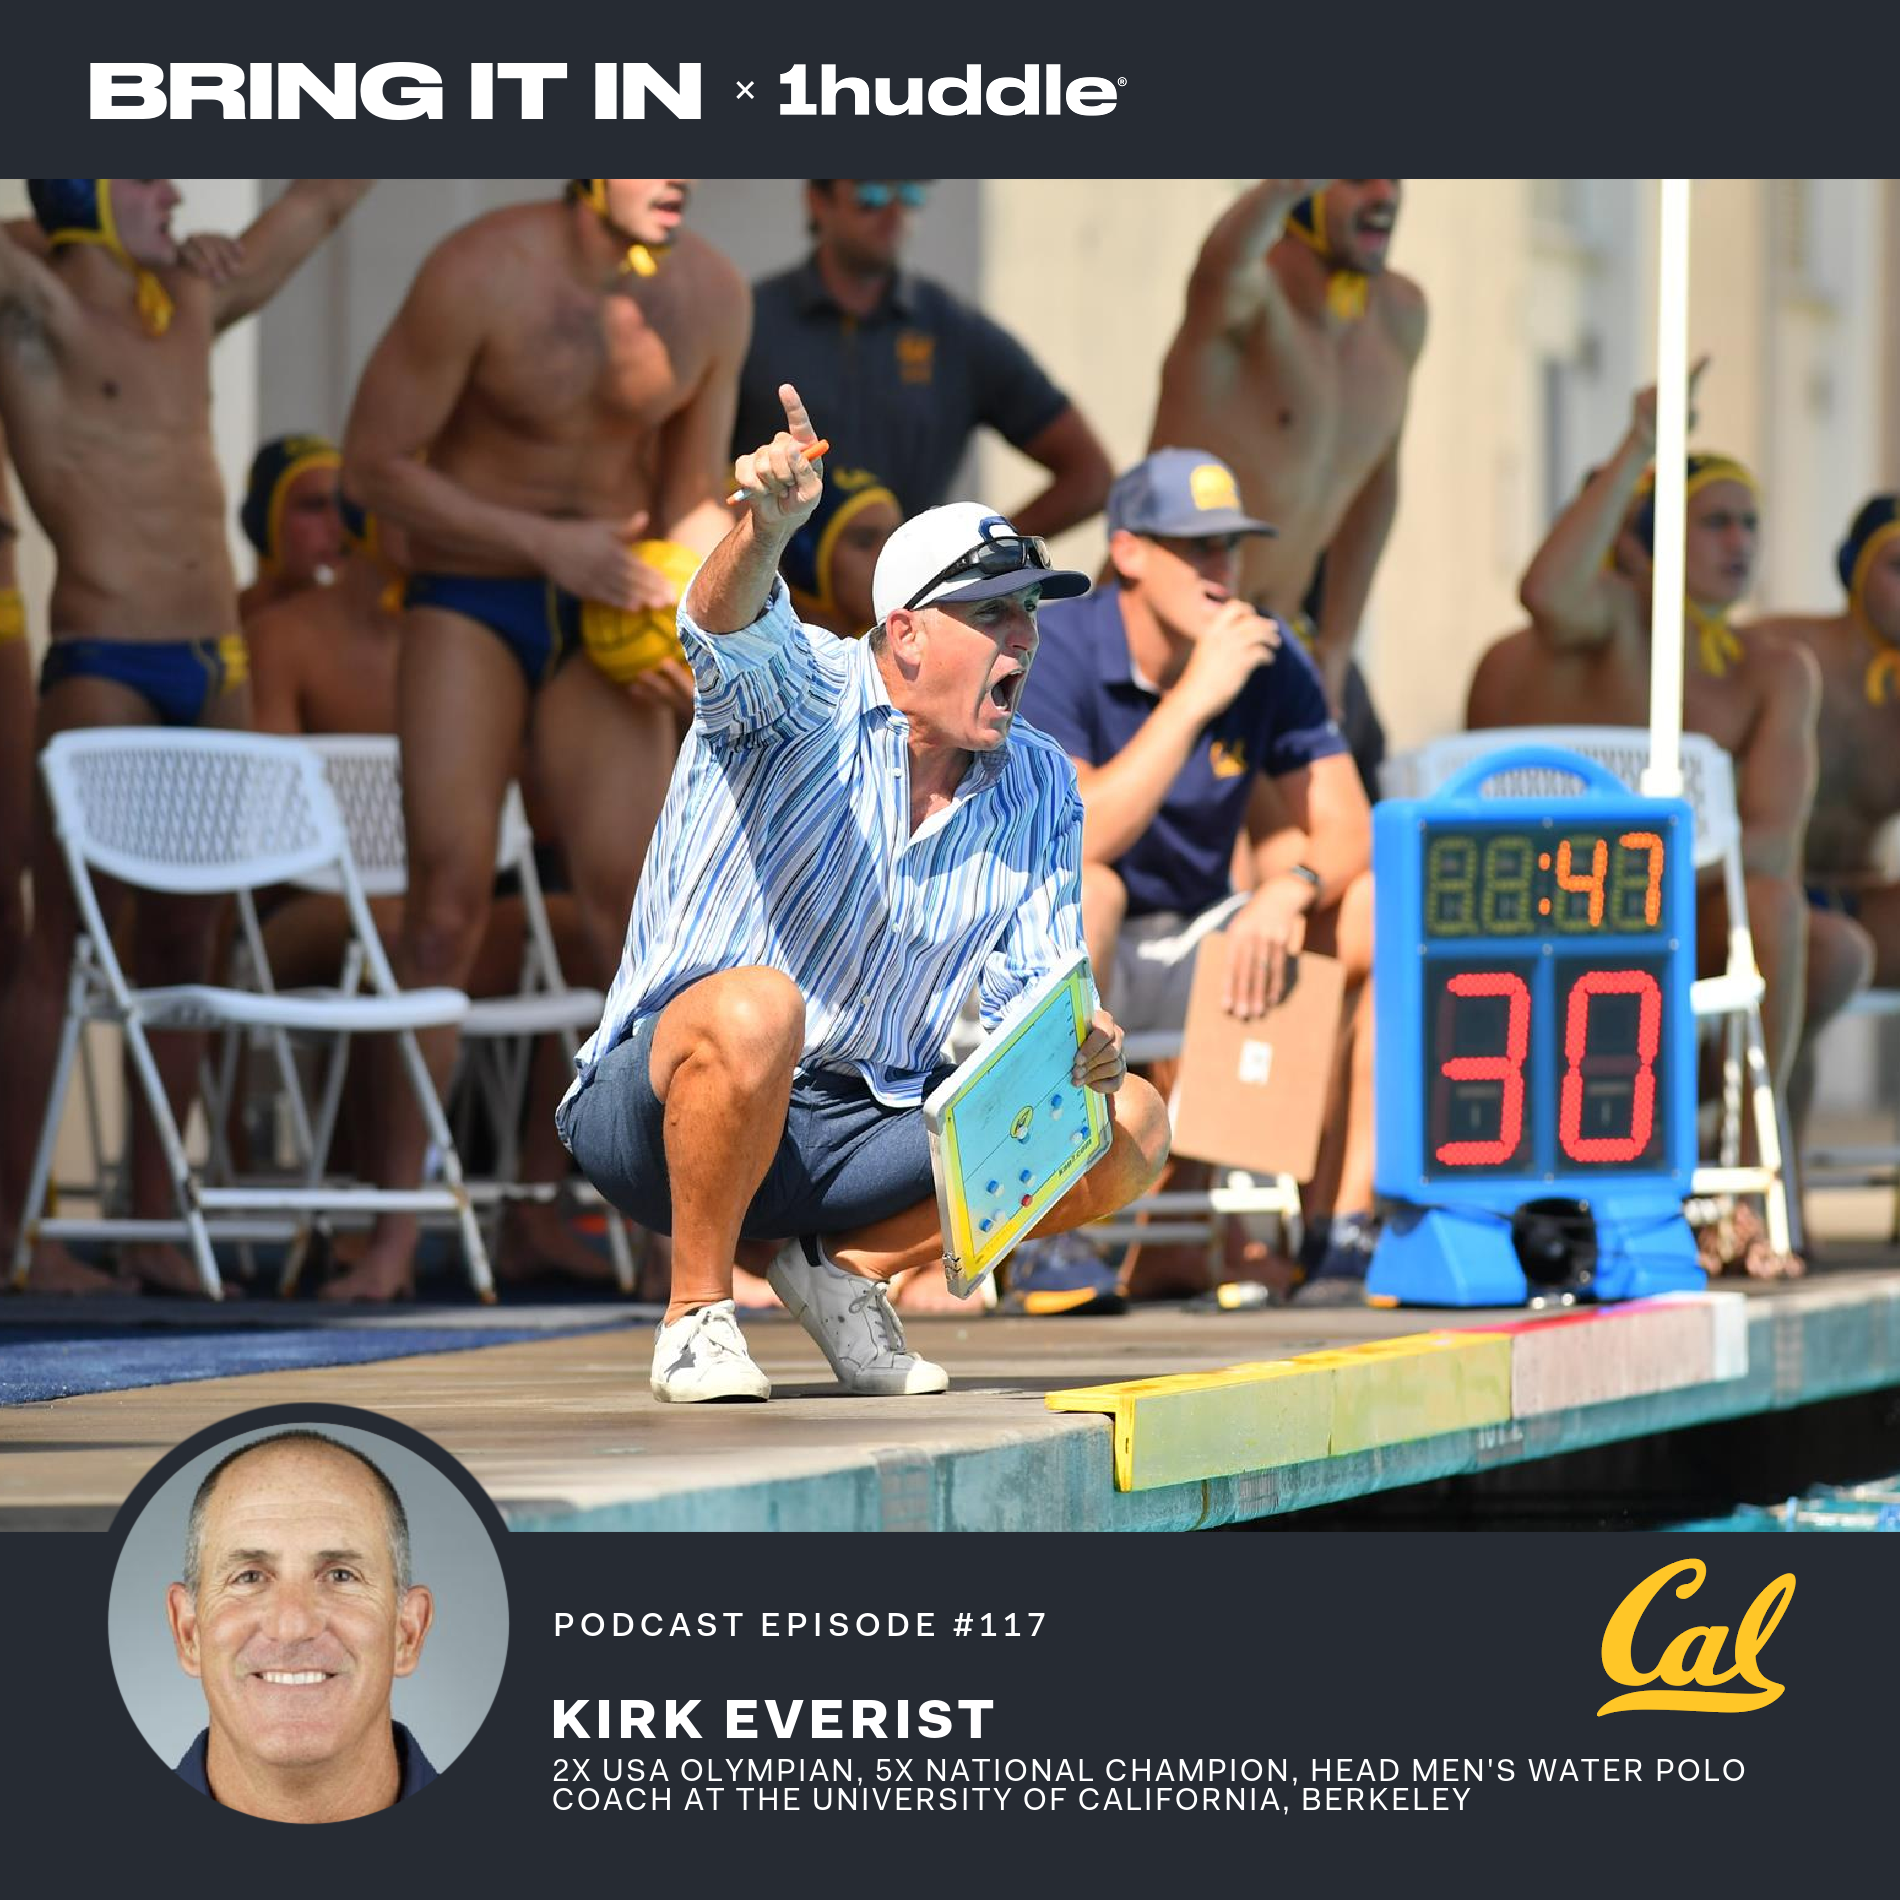 5x National Champion, Head Men’s Water Polo Coach at The University of California, Berkeley